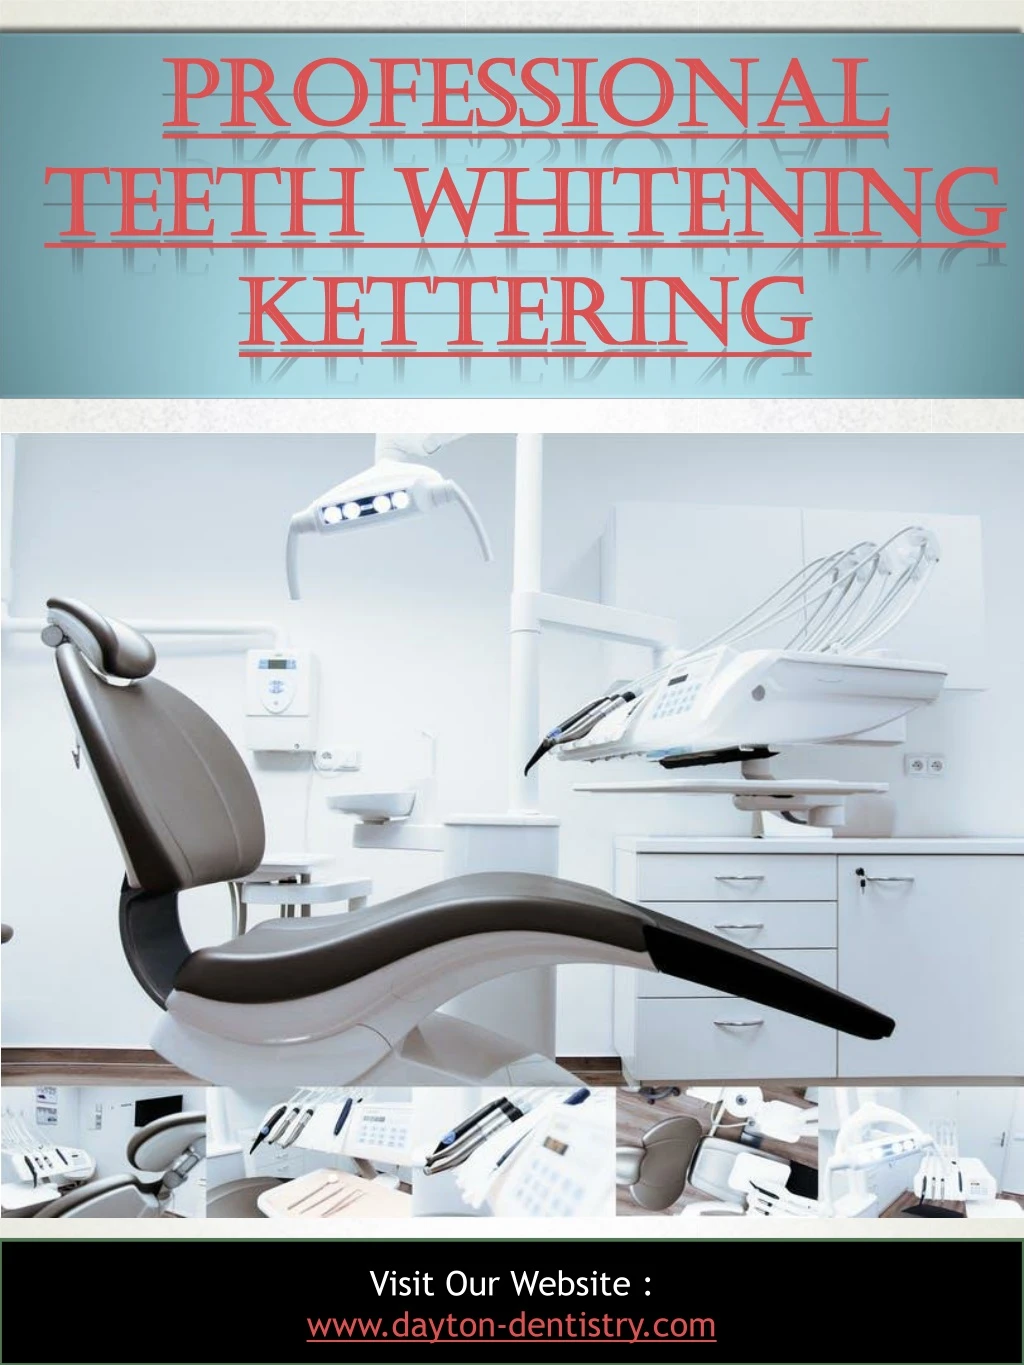 professional professional teeth whitening teeth